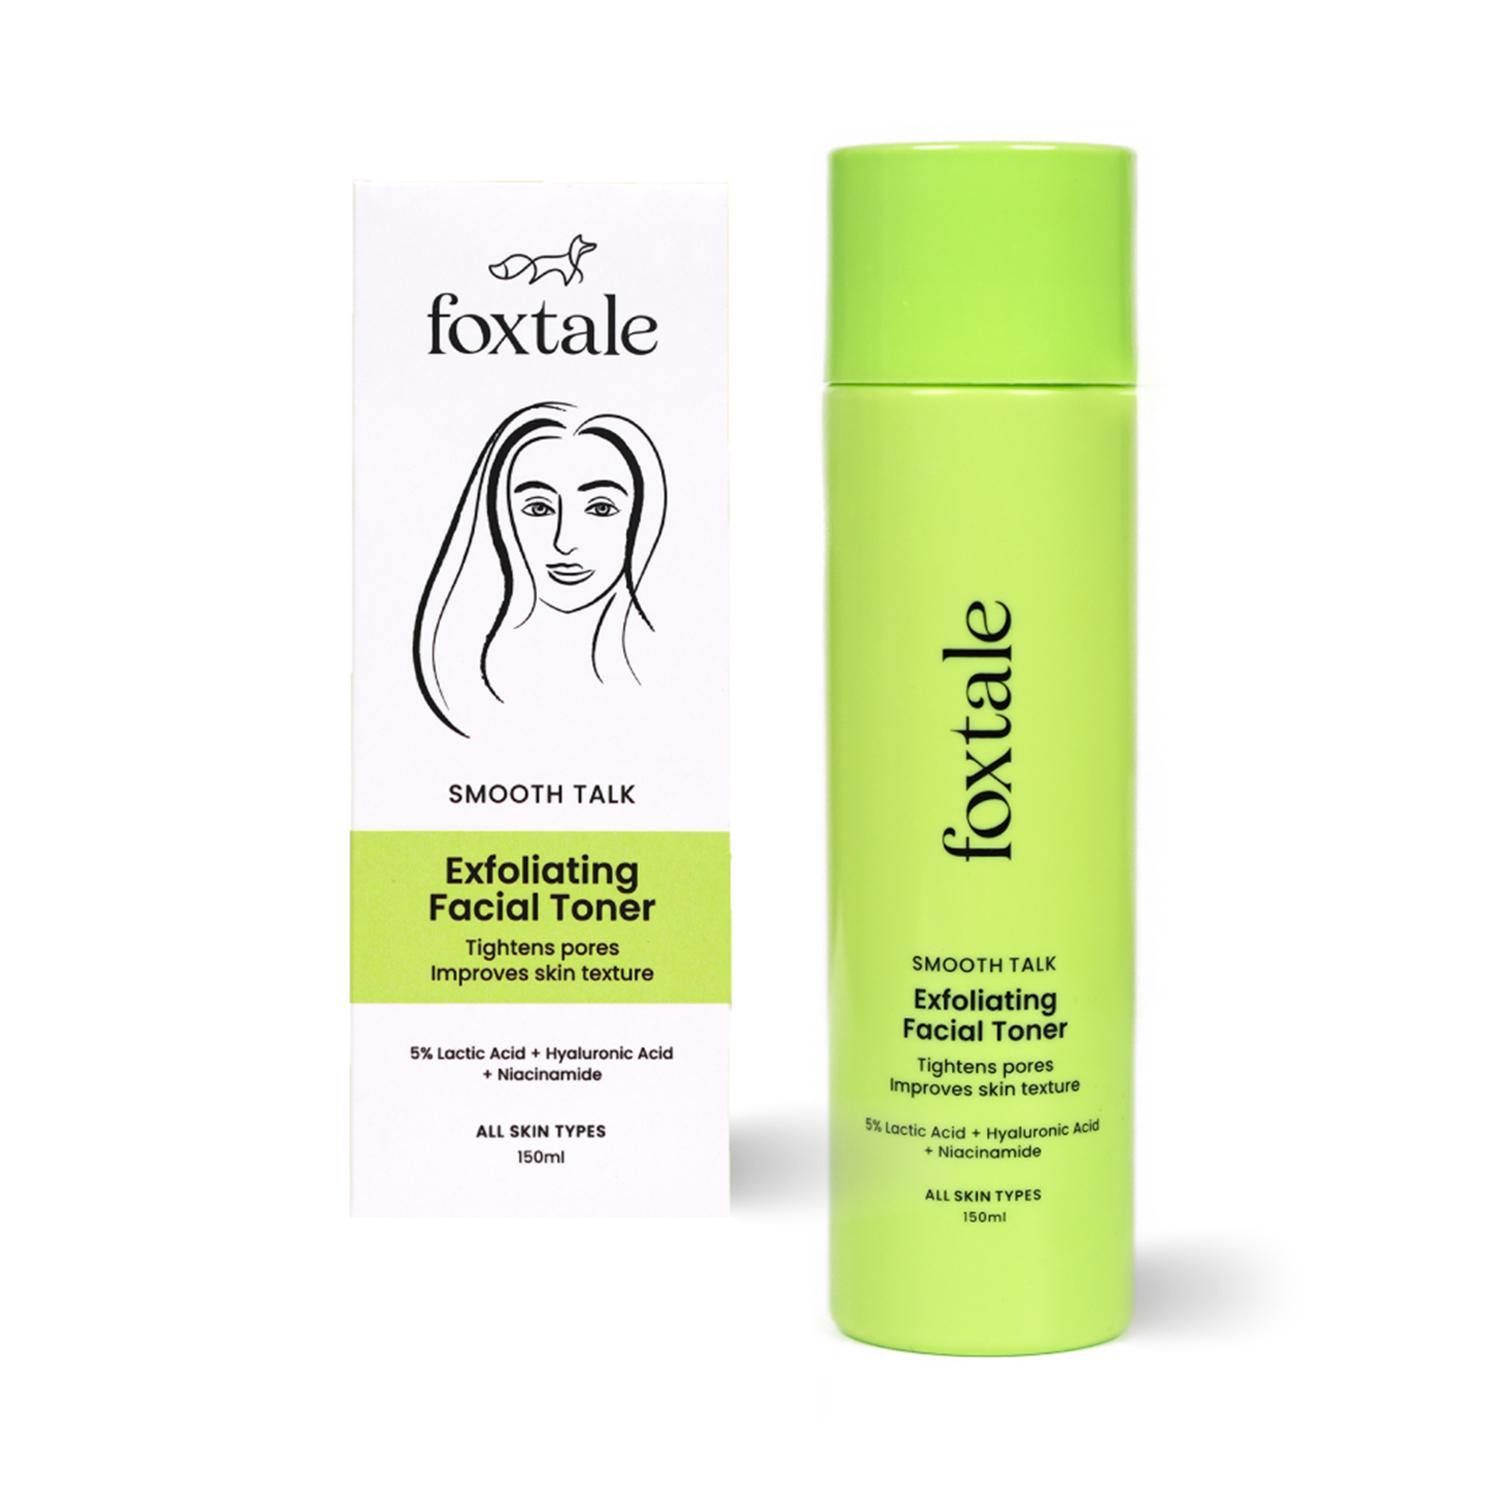 Foxtale | Foxtale Smooth Talk Exfoliating Facial Toner 5% Lactic Acid + Hyaluronic Acid + Niacinamide (150 ml)